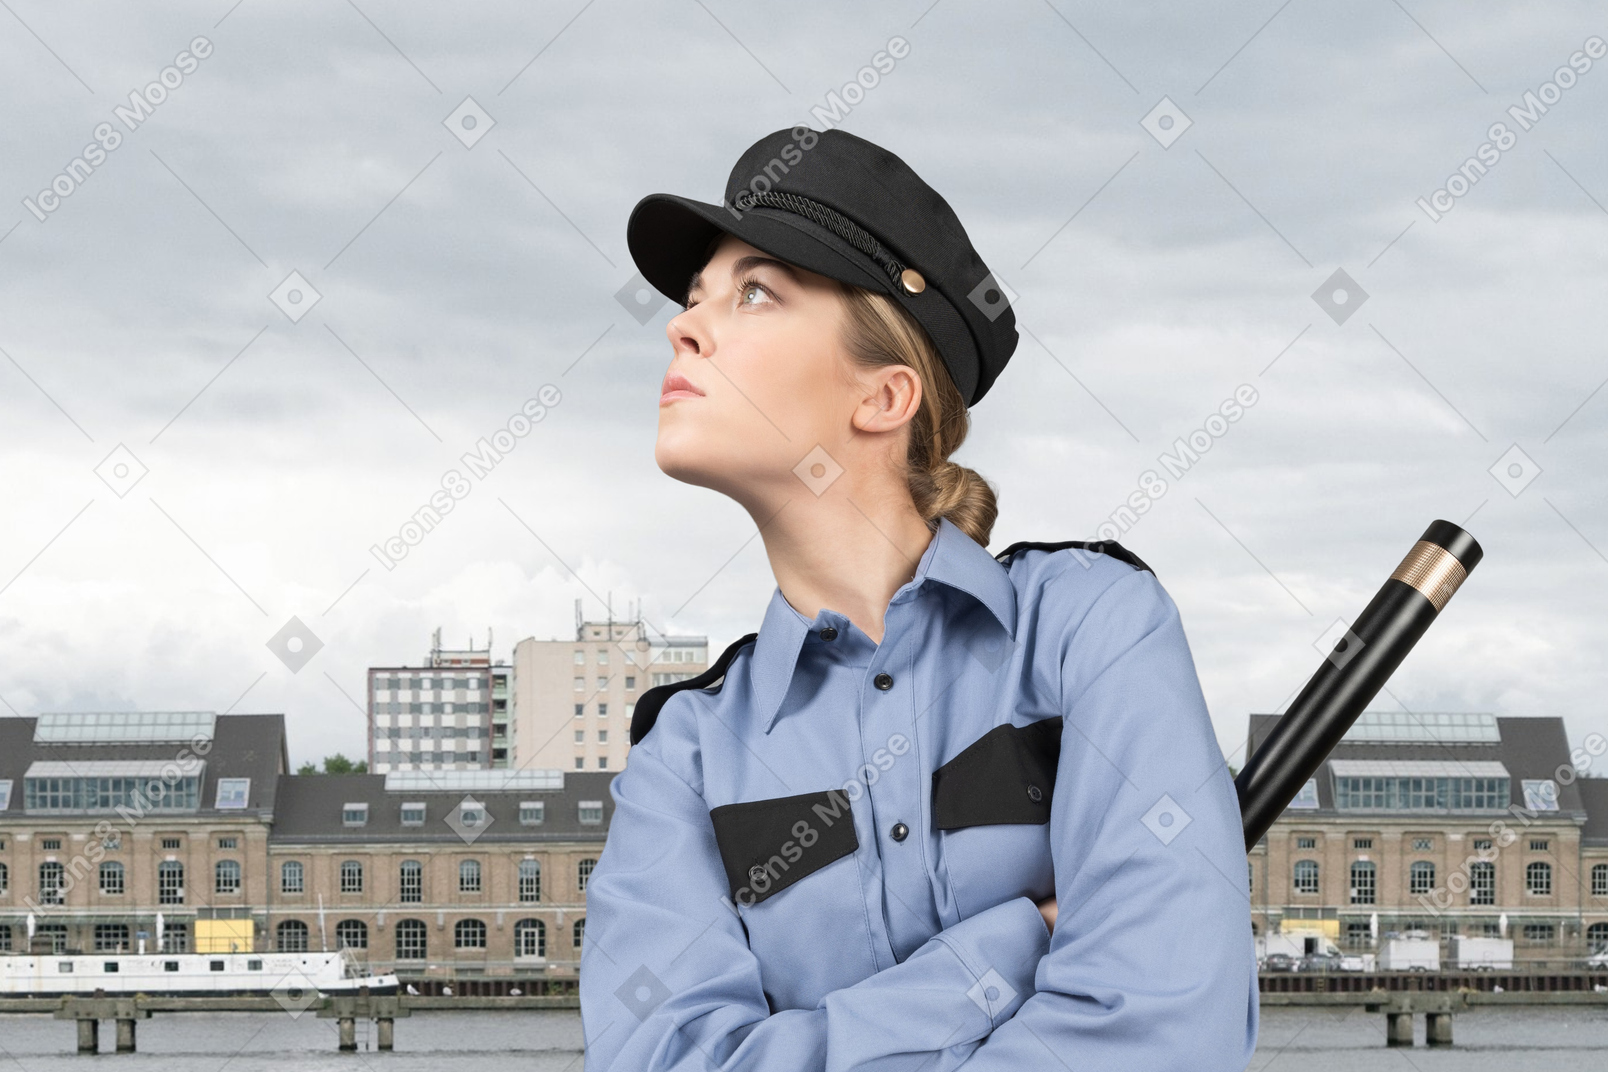 Policewoman in the empty quarantine city